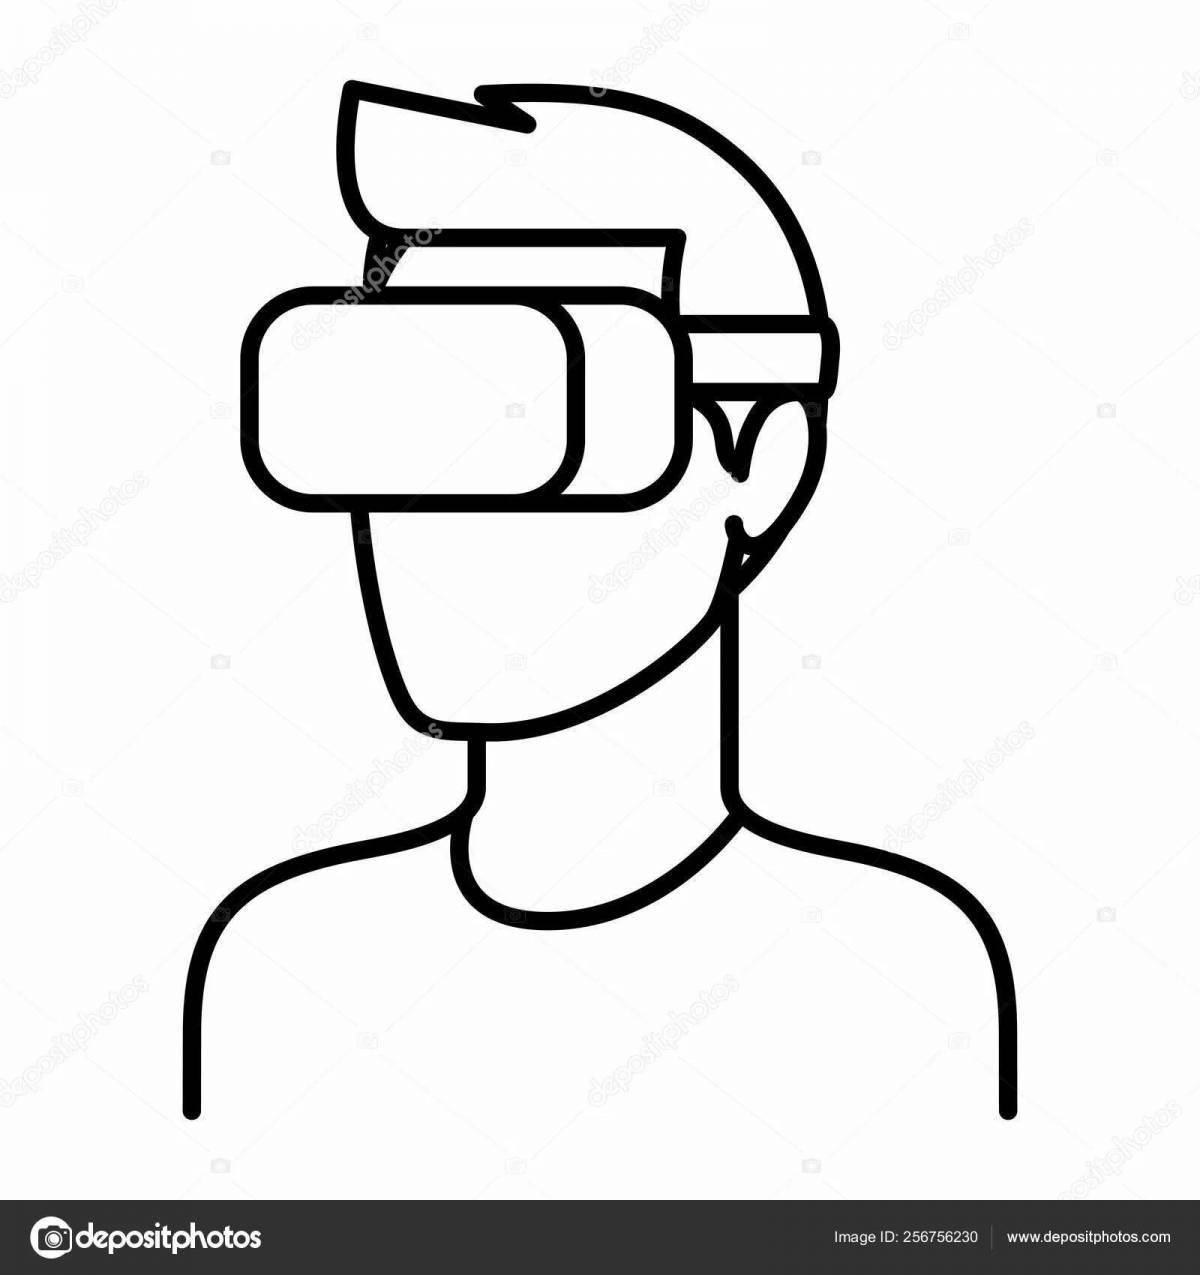 Stimulating virtual reality coloring page